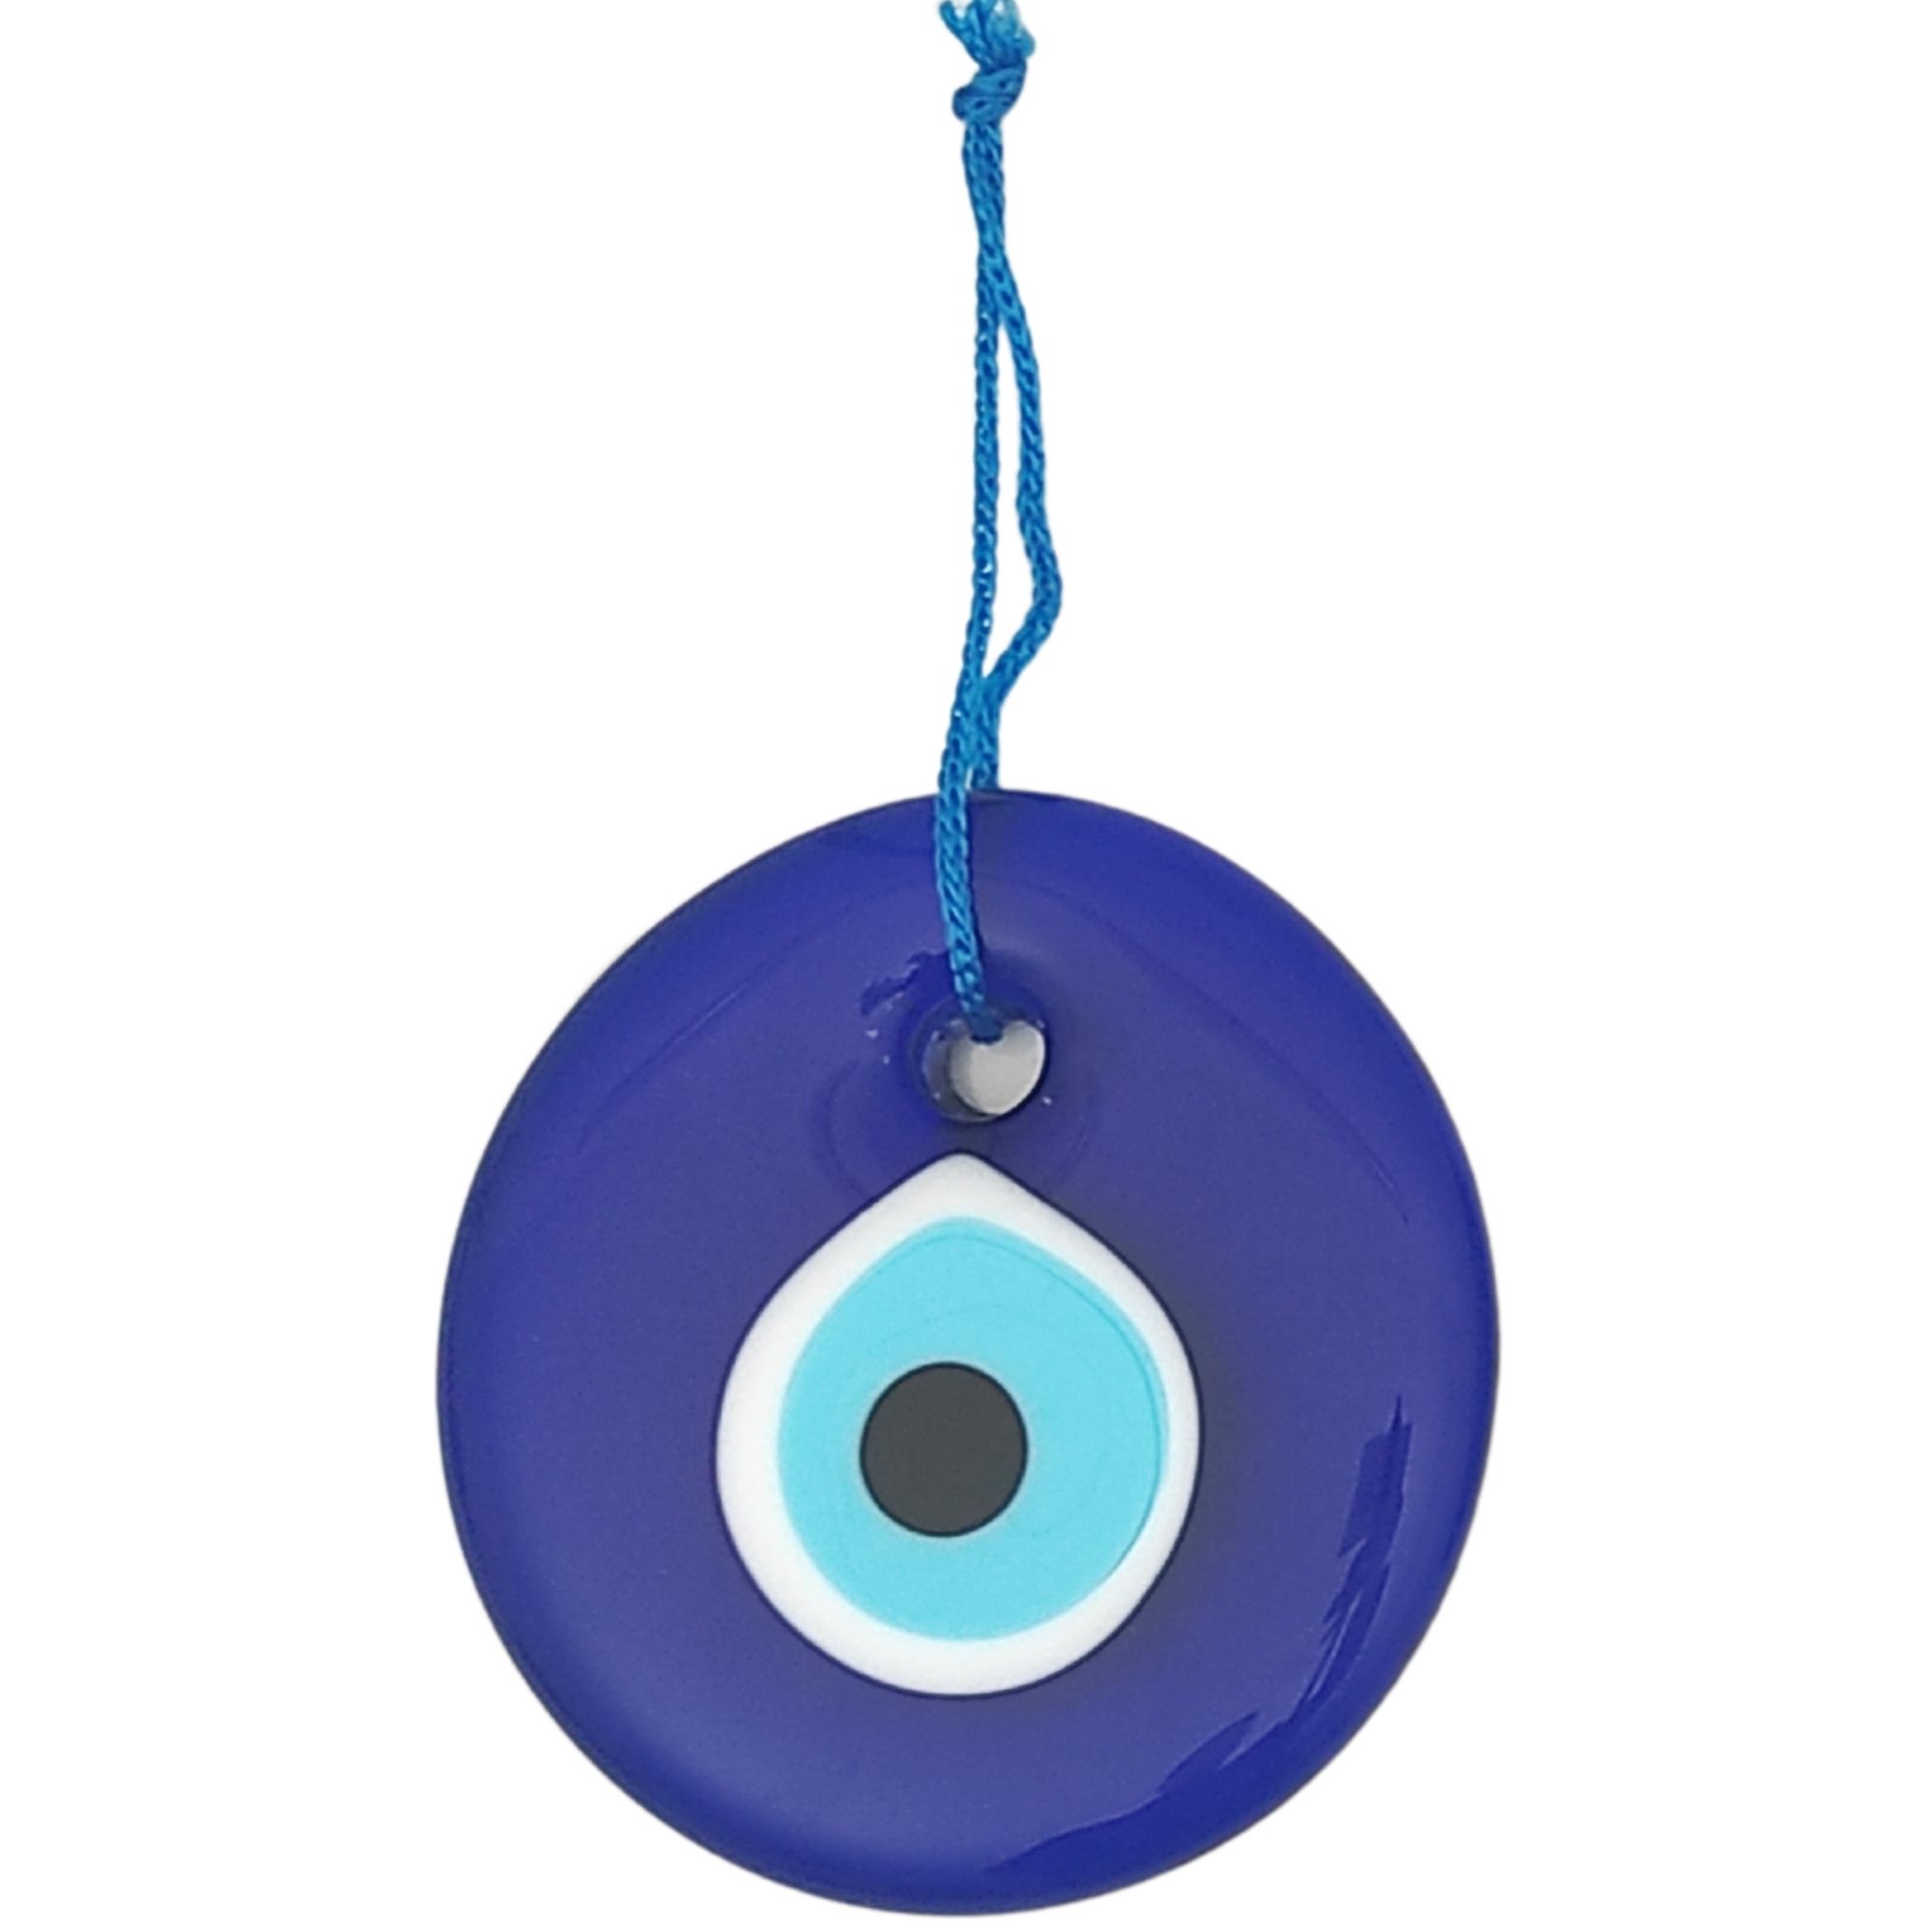  Erbulus Türkisches blaues böses Auge Wandbehang